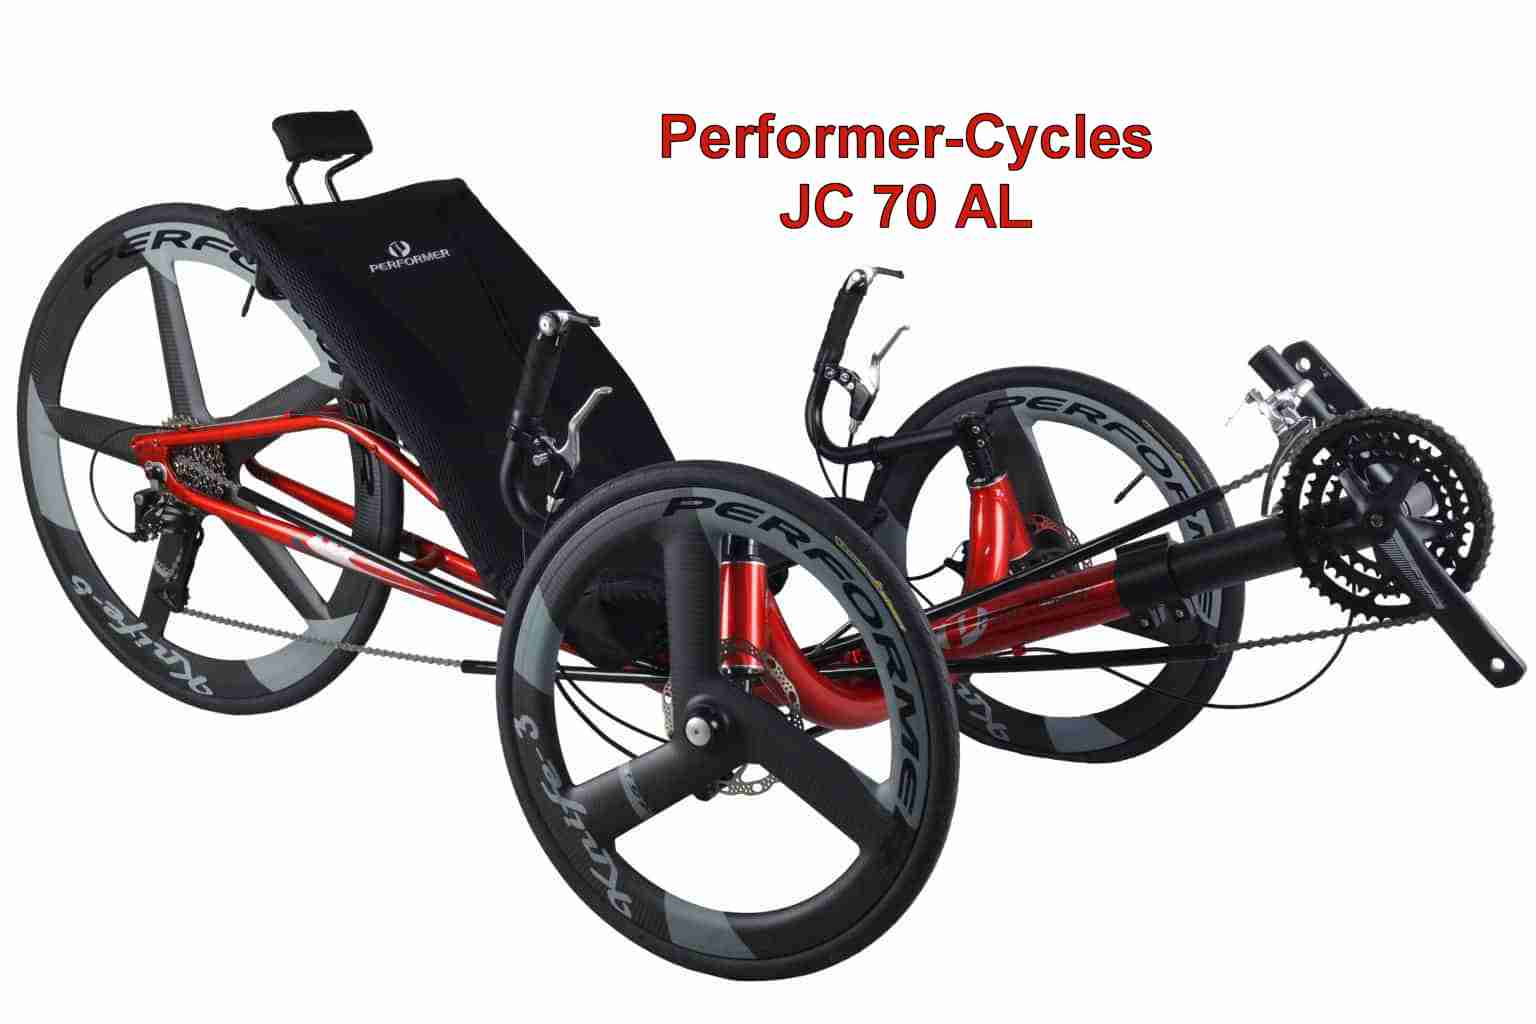 Performer-Cycle Jc 70 AL